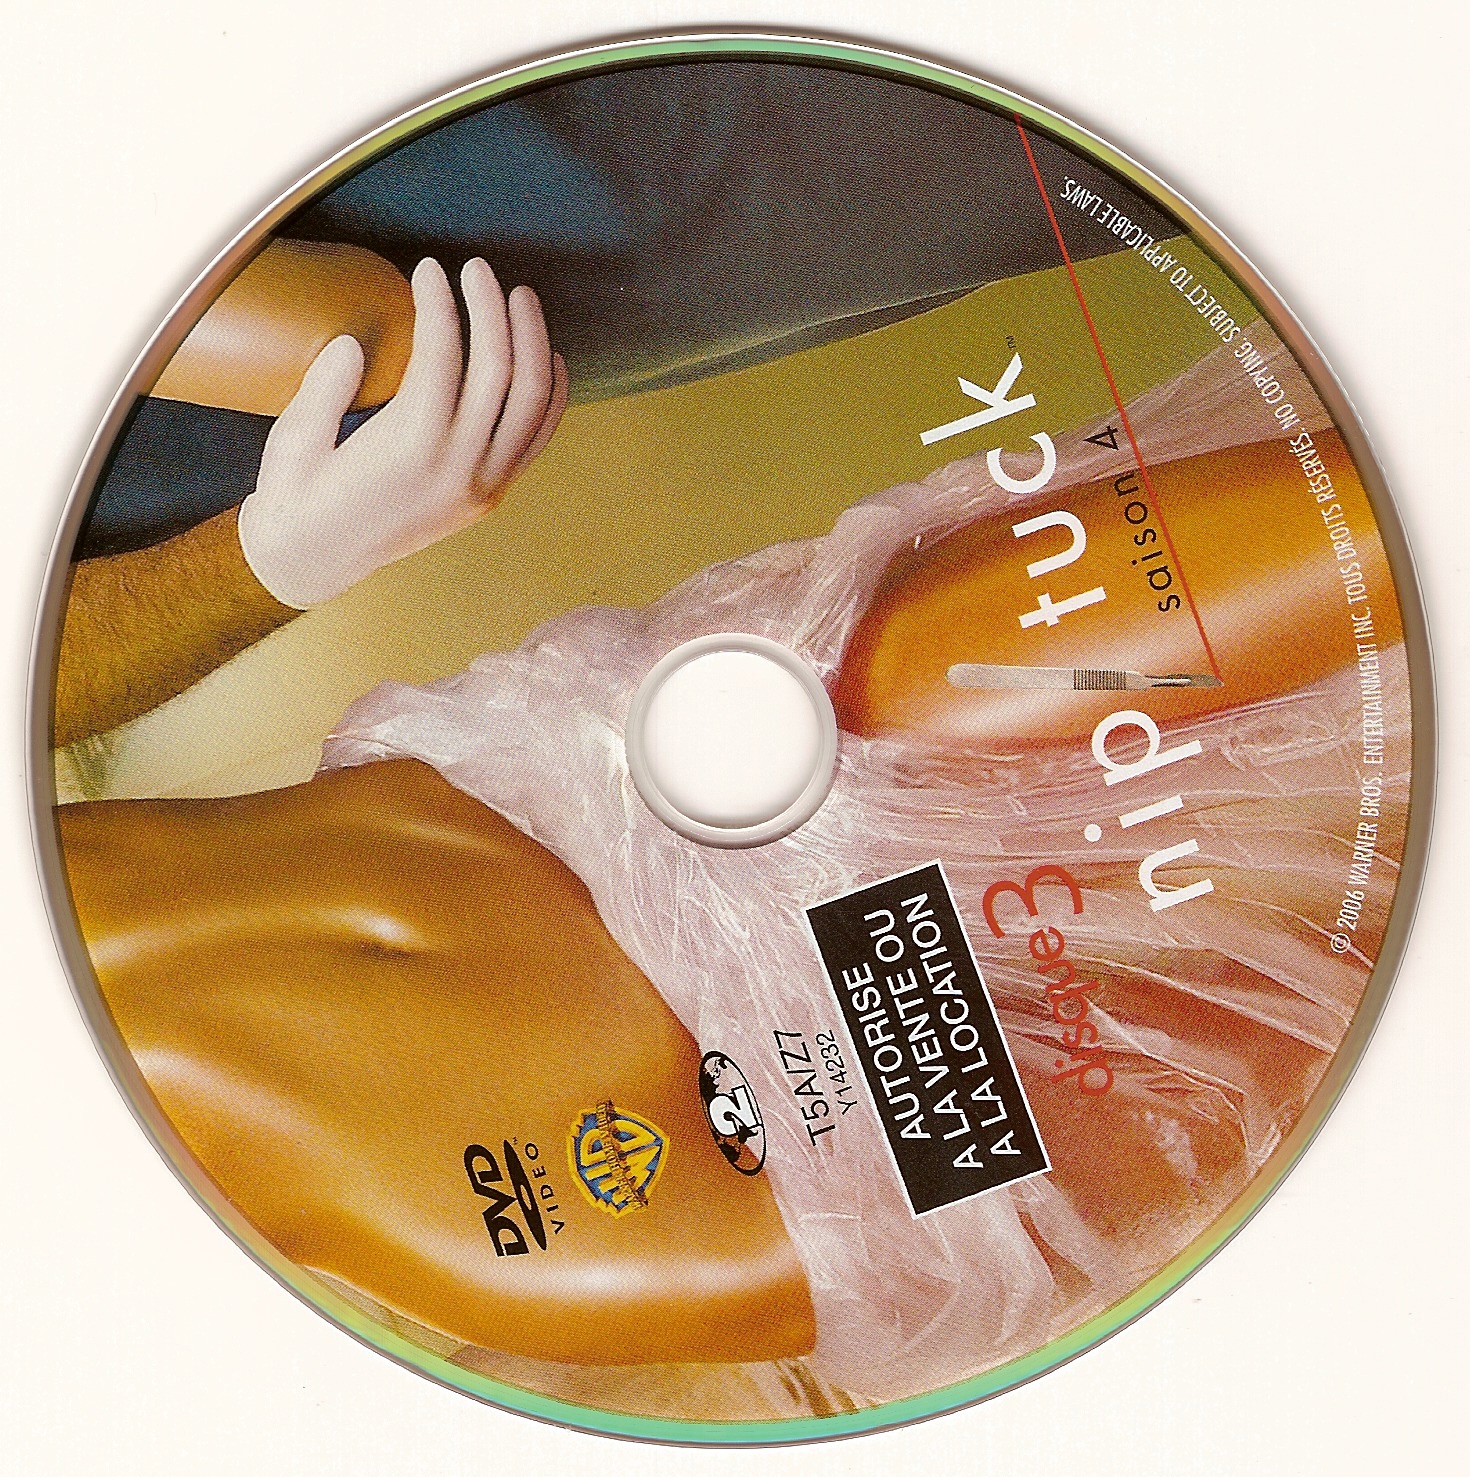 Nip-Tuck saison 4 DVD 3